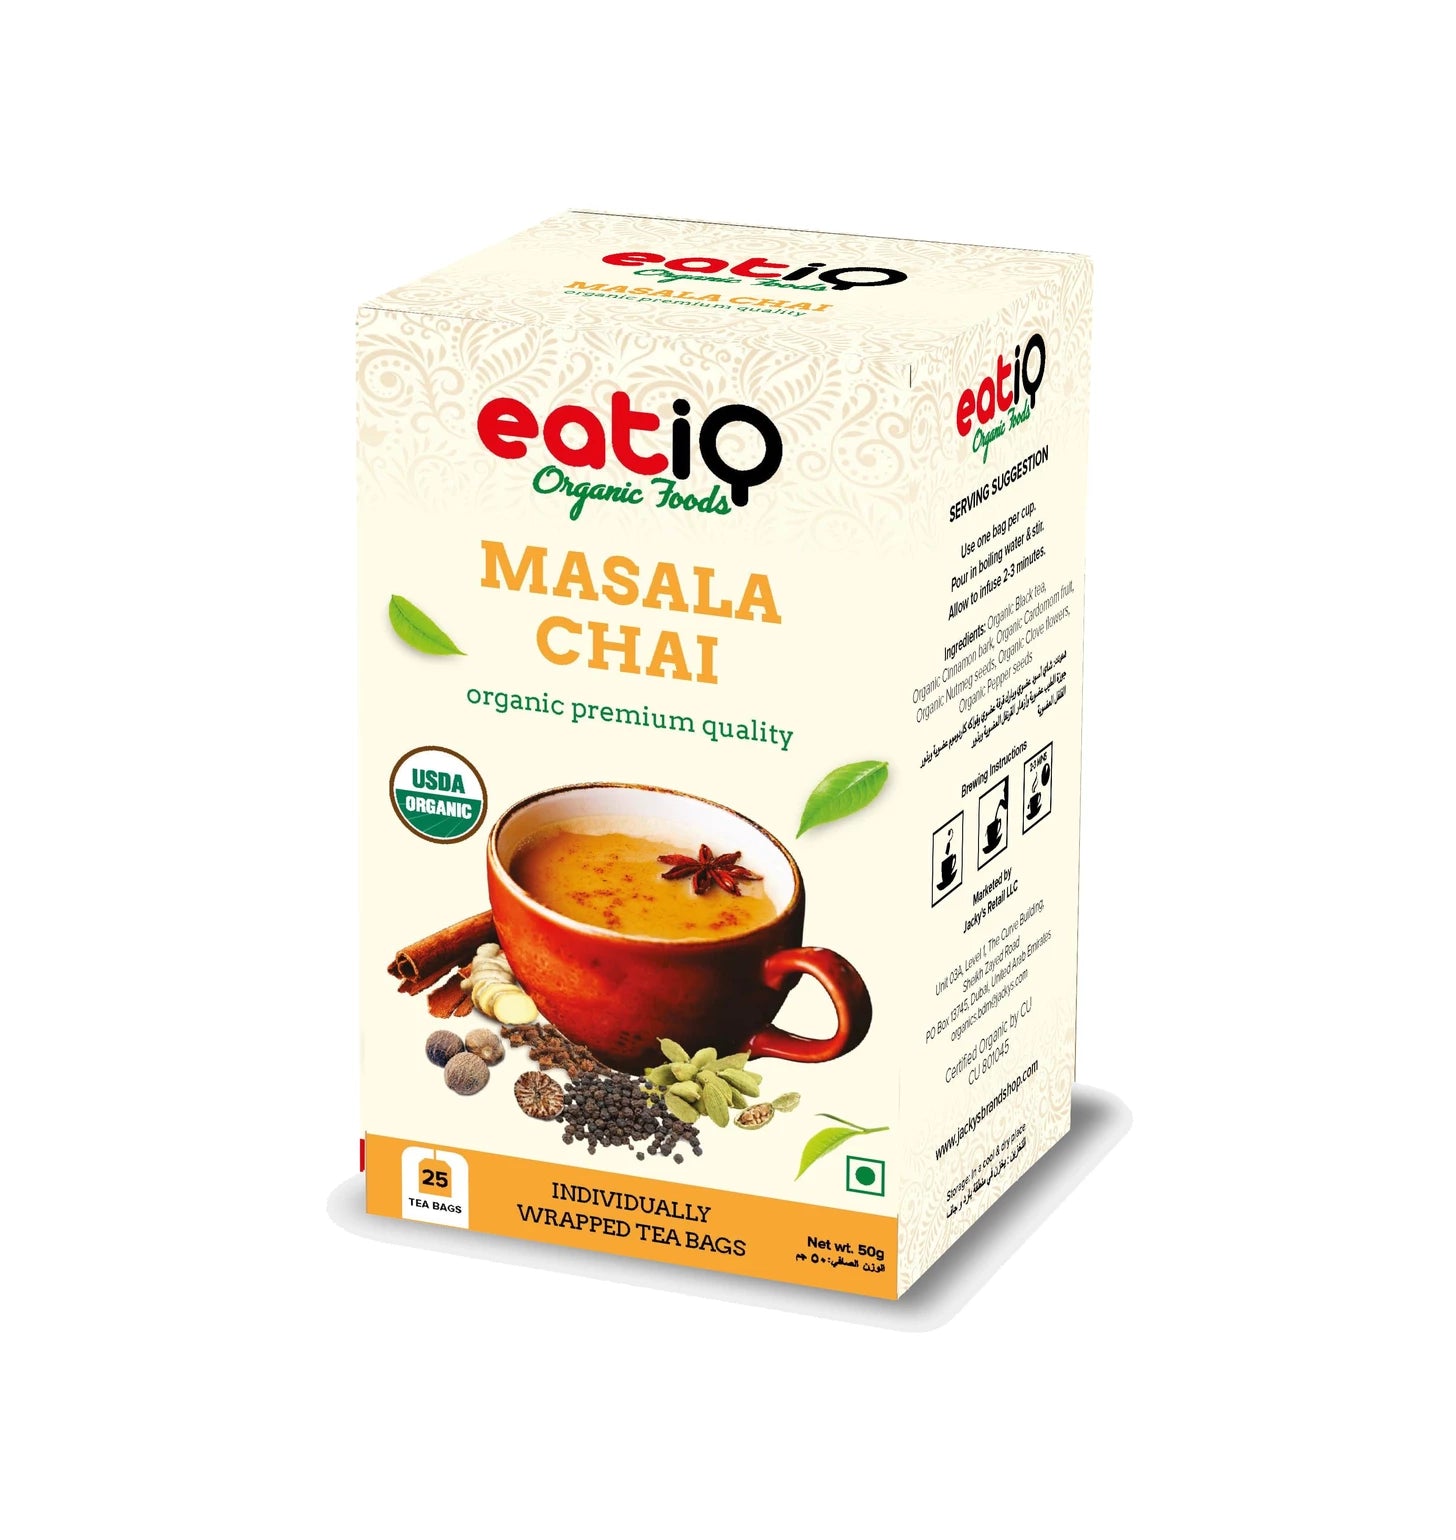 EATIQ ORGANIC FOODS Masala Chai Tea, 50g